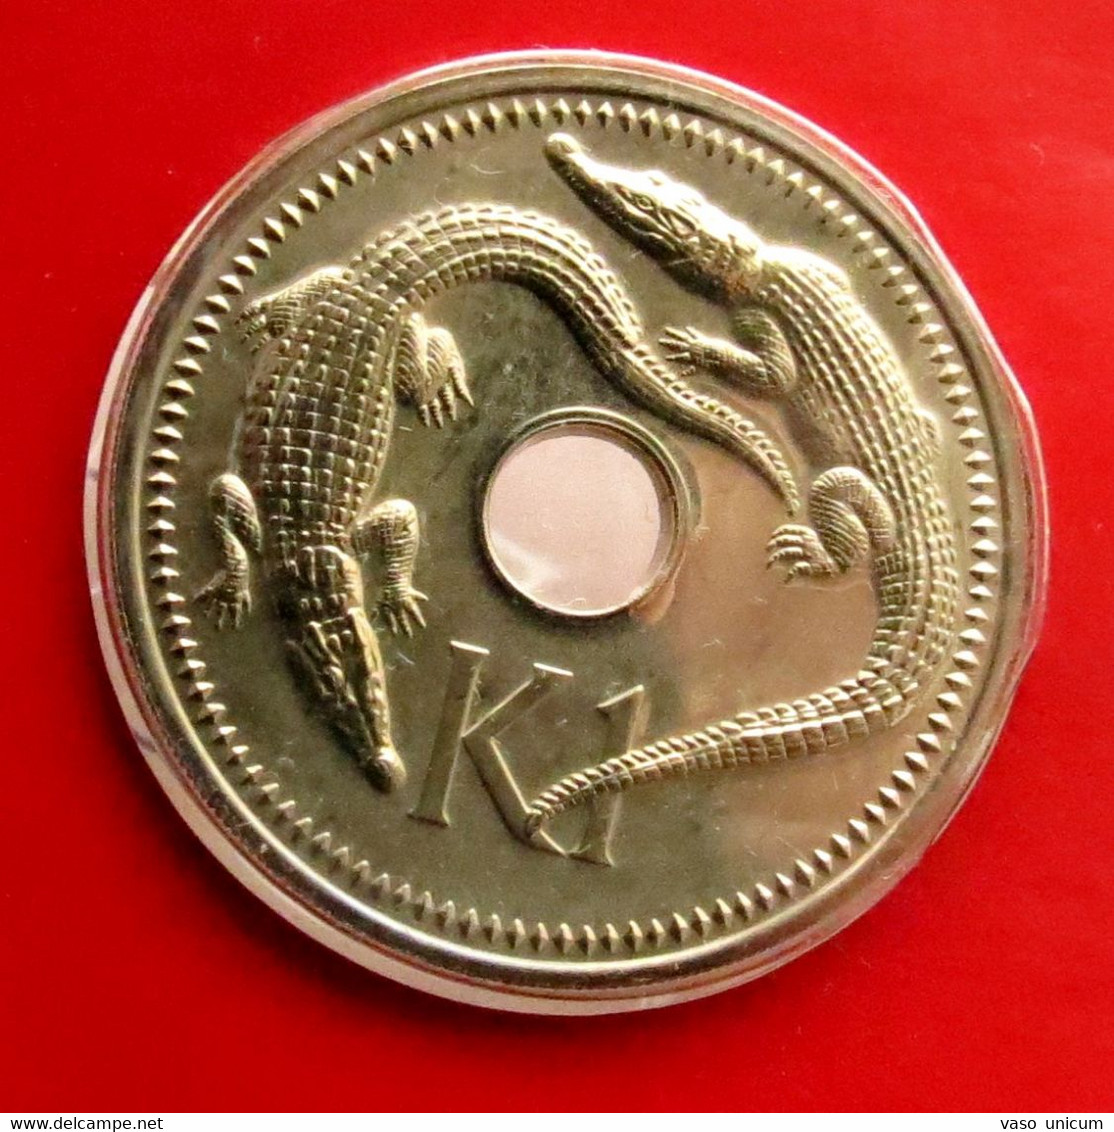 Papua New Guinea 1 Kina 1977 UNC - Minted 603 Coins Only - Papoea-Nieuw-Guinea